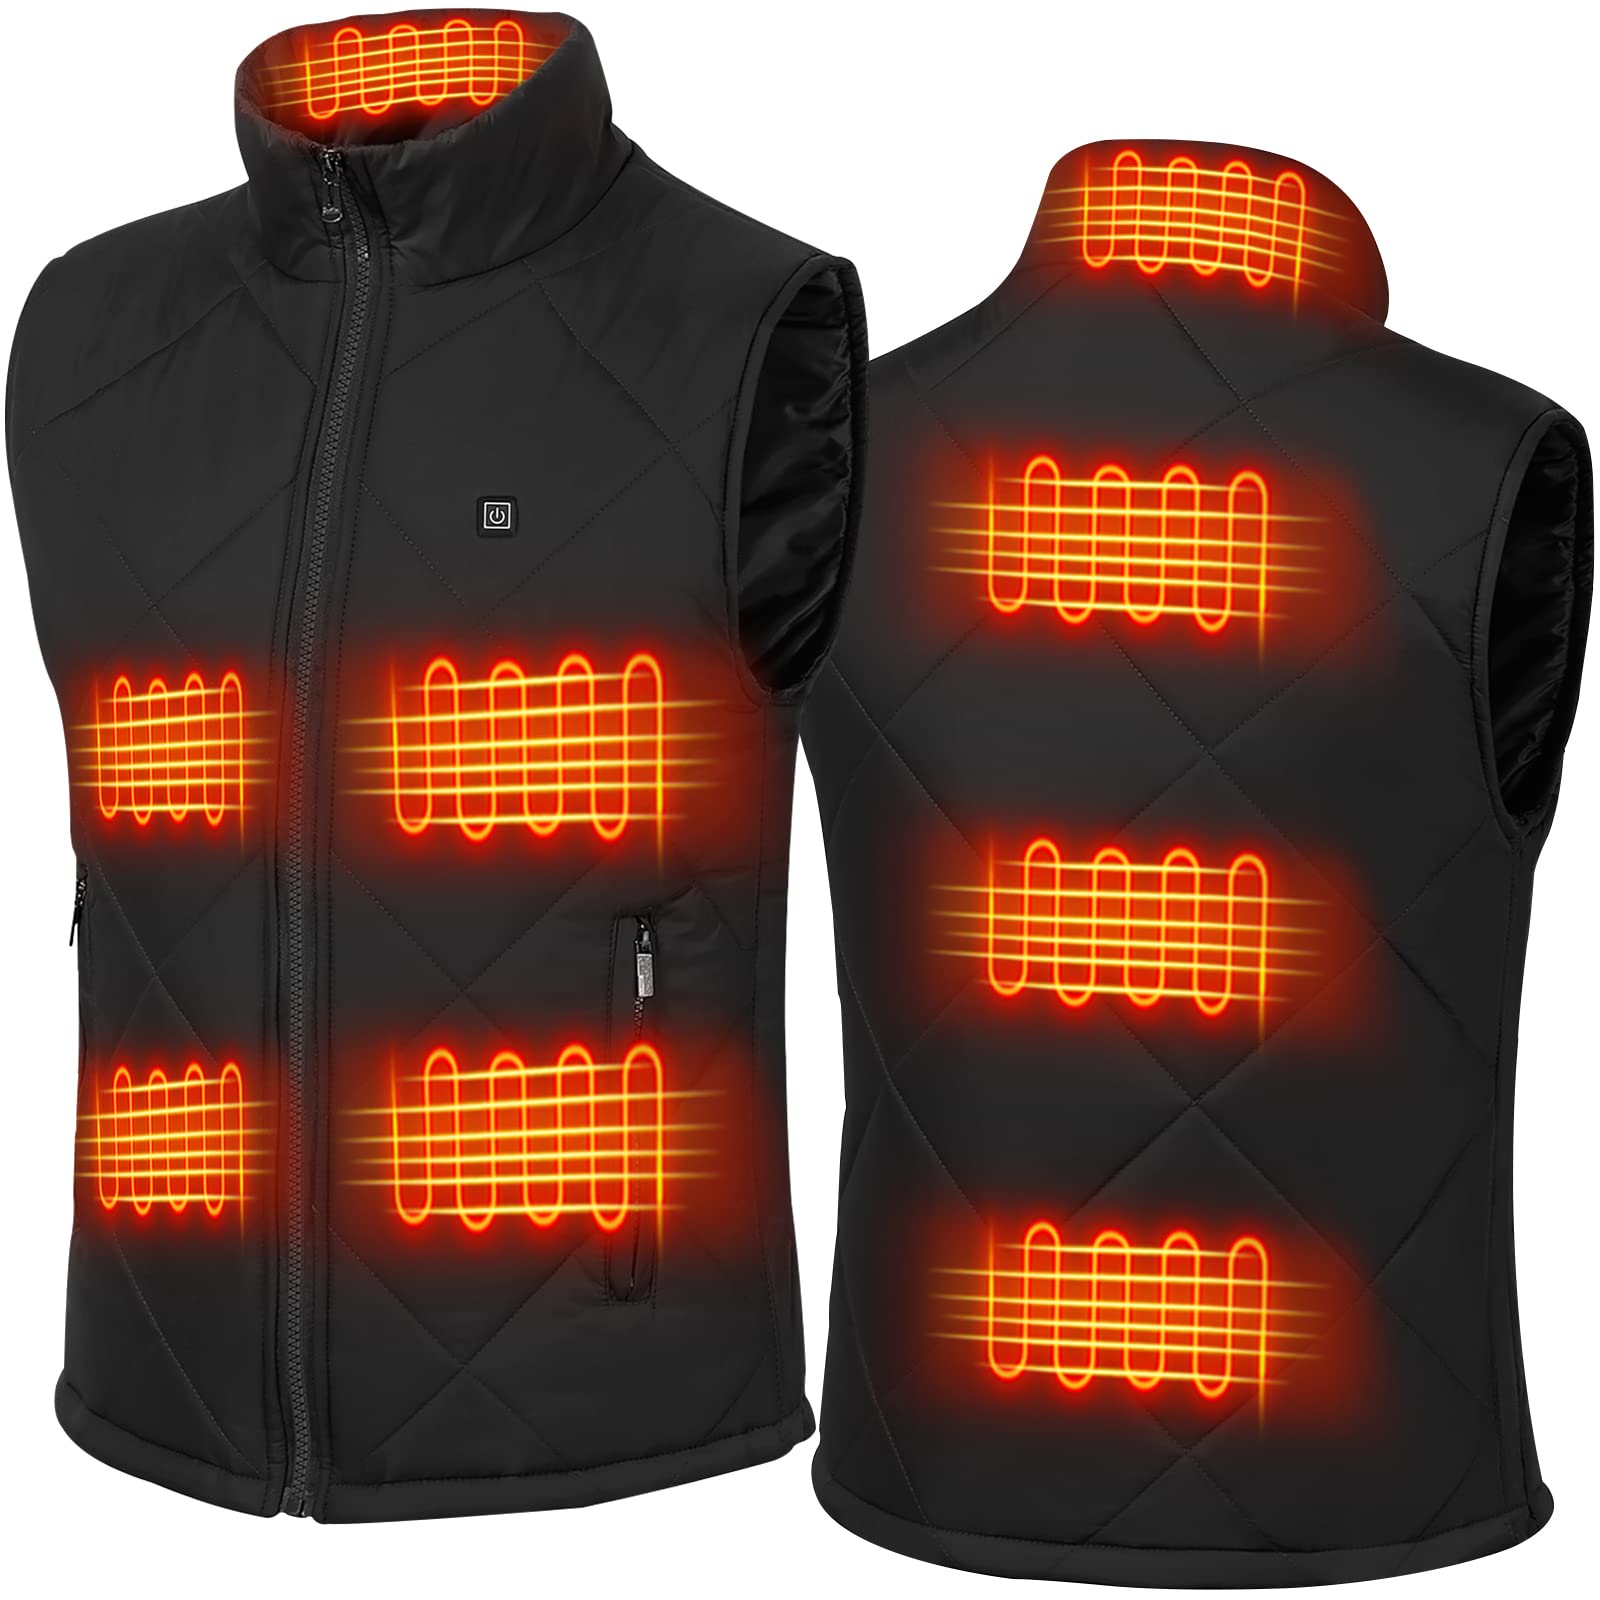 Heated Vest for Men Women USB Electric 8 Heating Zones Heated Jacket Vest for Winter Warm